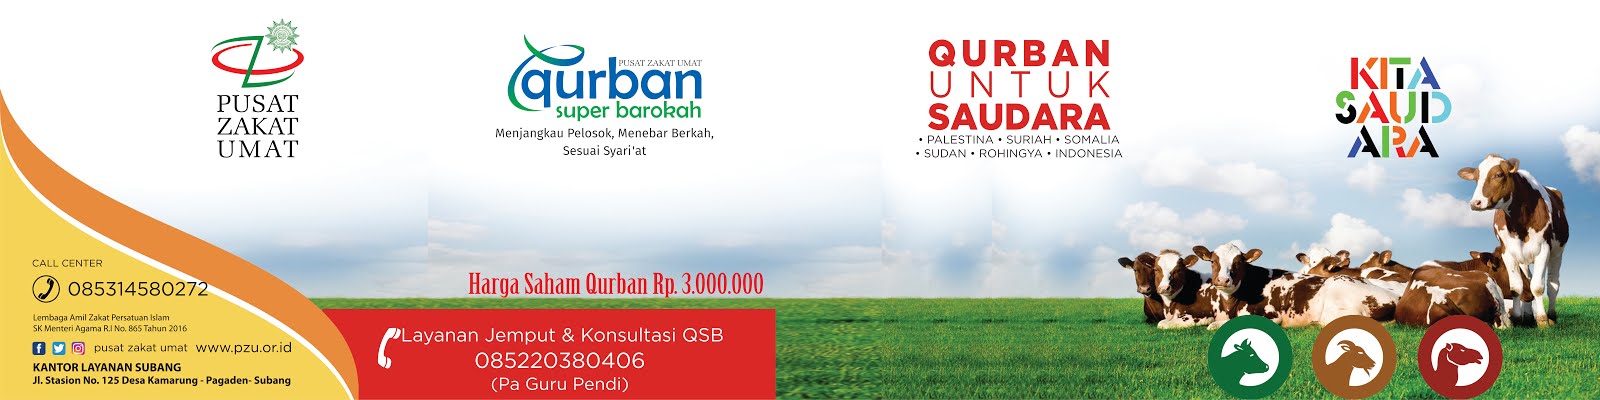 Qurban Super Barokah (QSB)